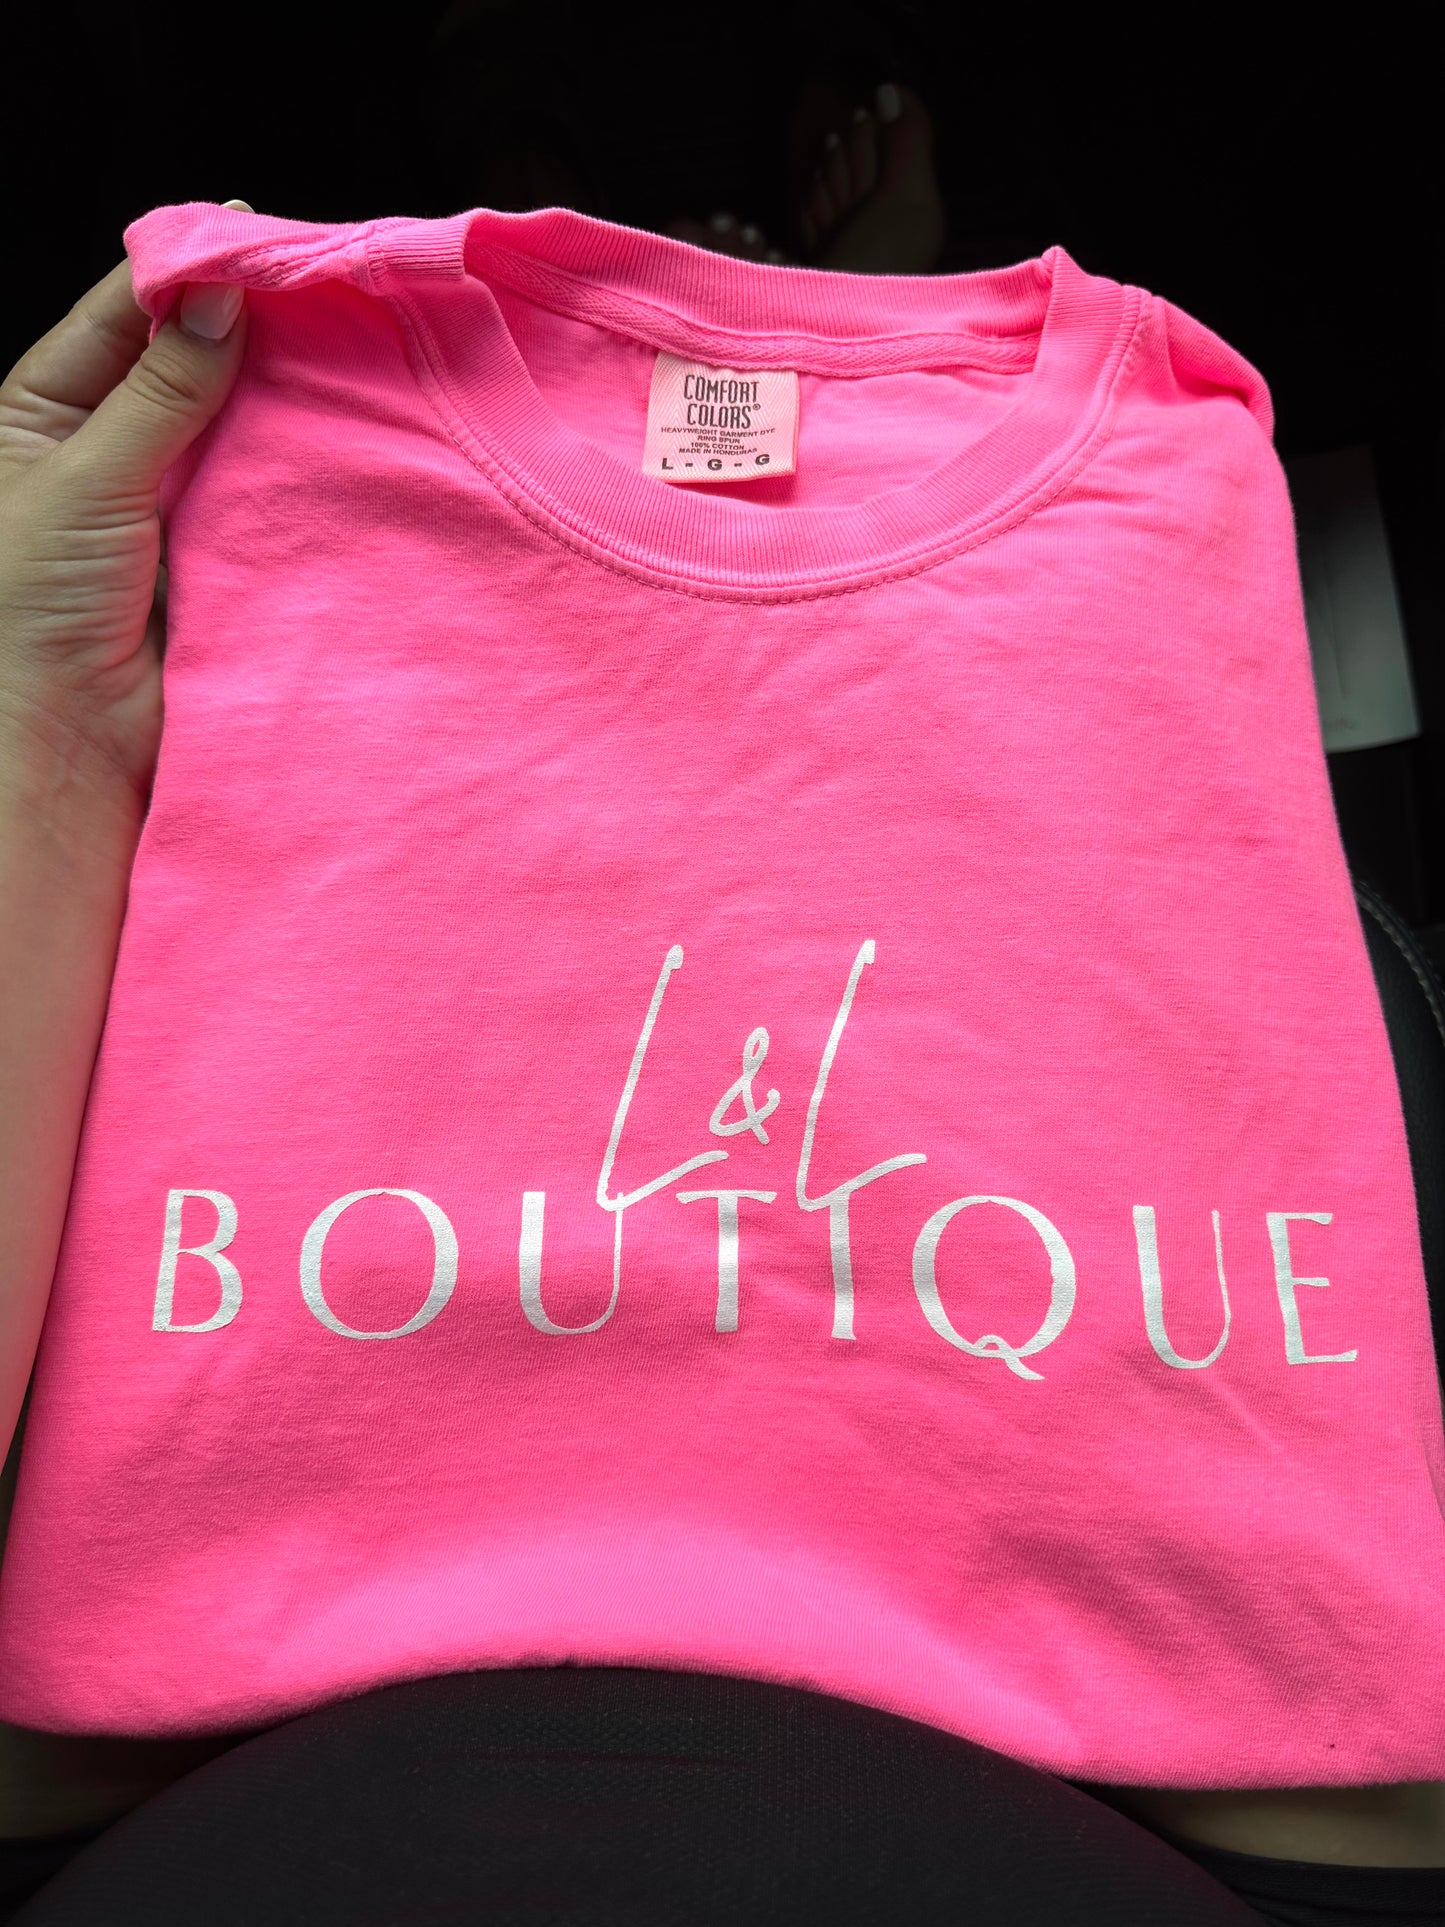 Hot Pink L&L Boutique Tshirt